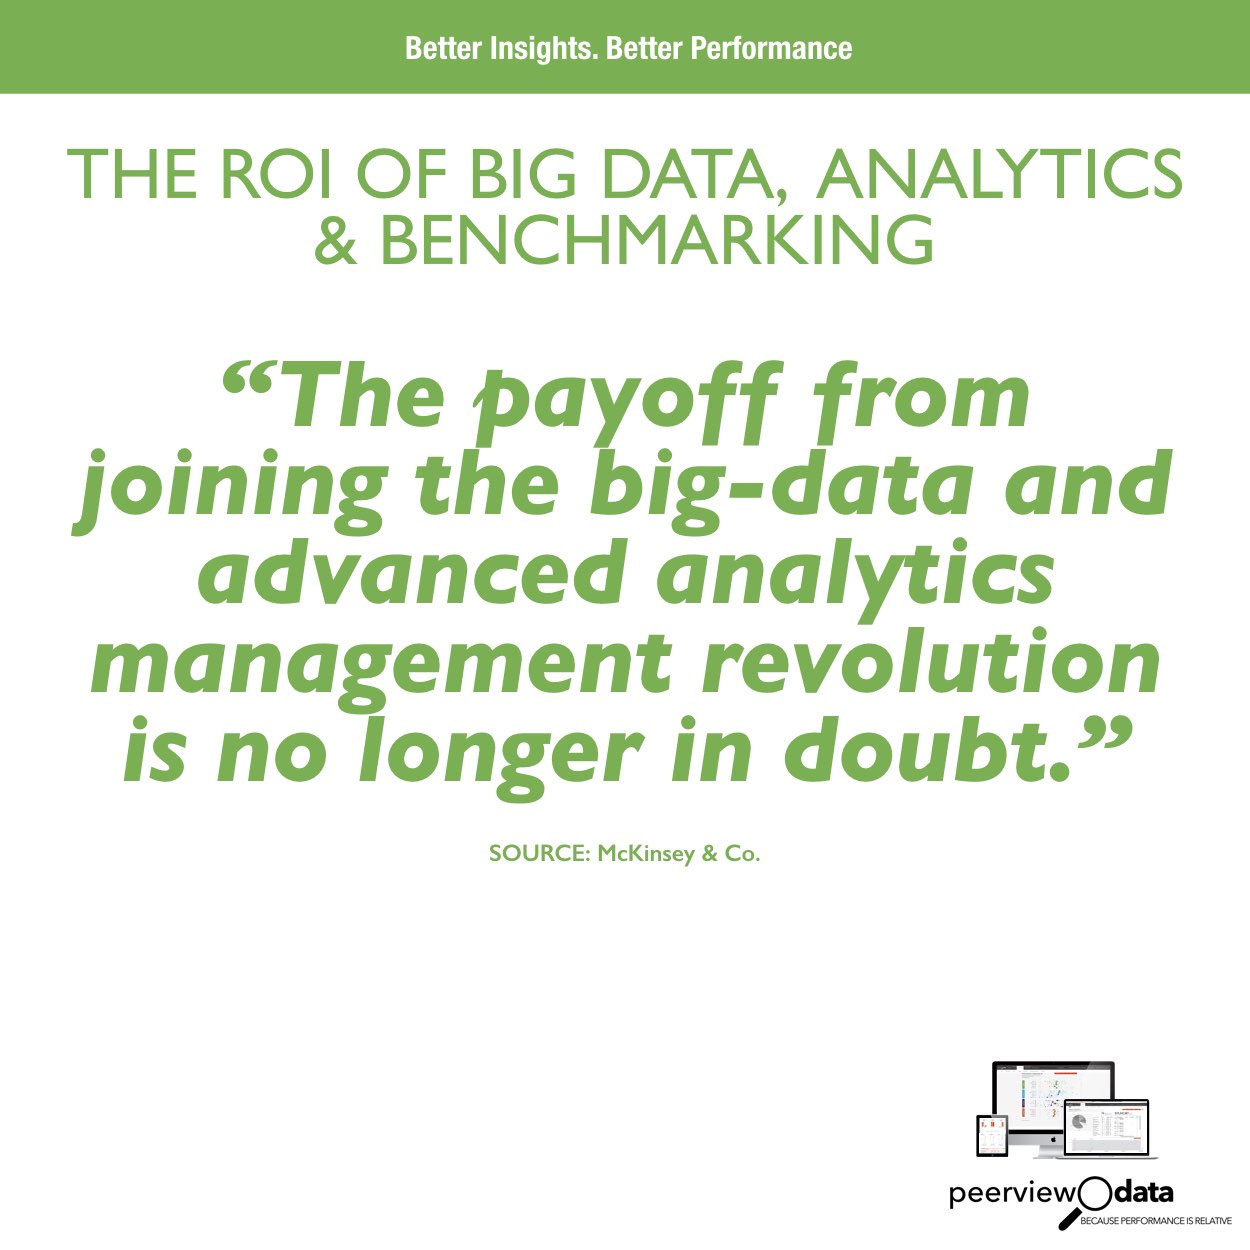 The ROI of Big Data, Analytics & Benchmarking #23